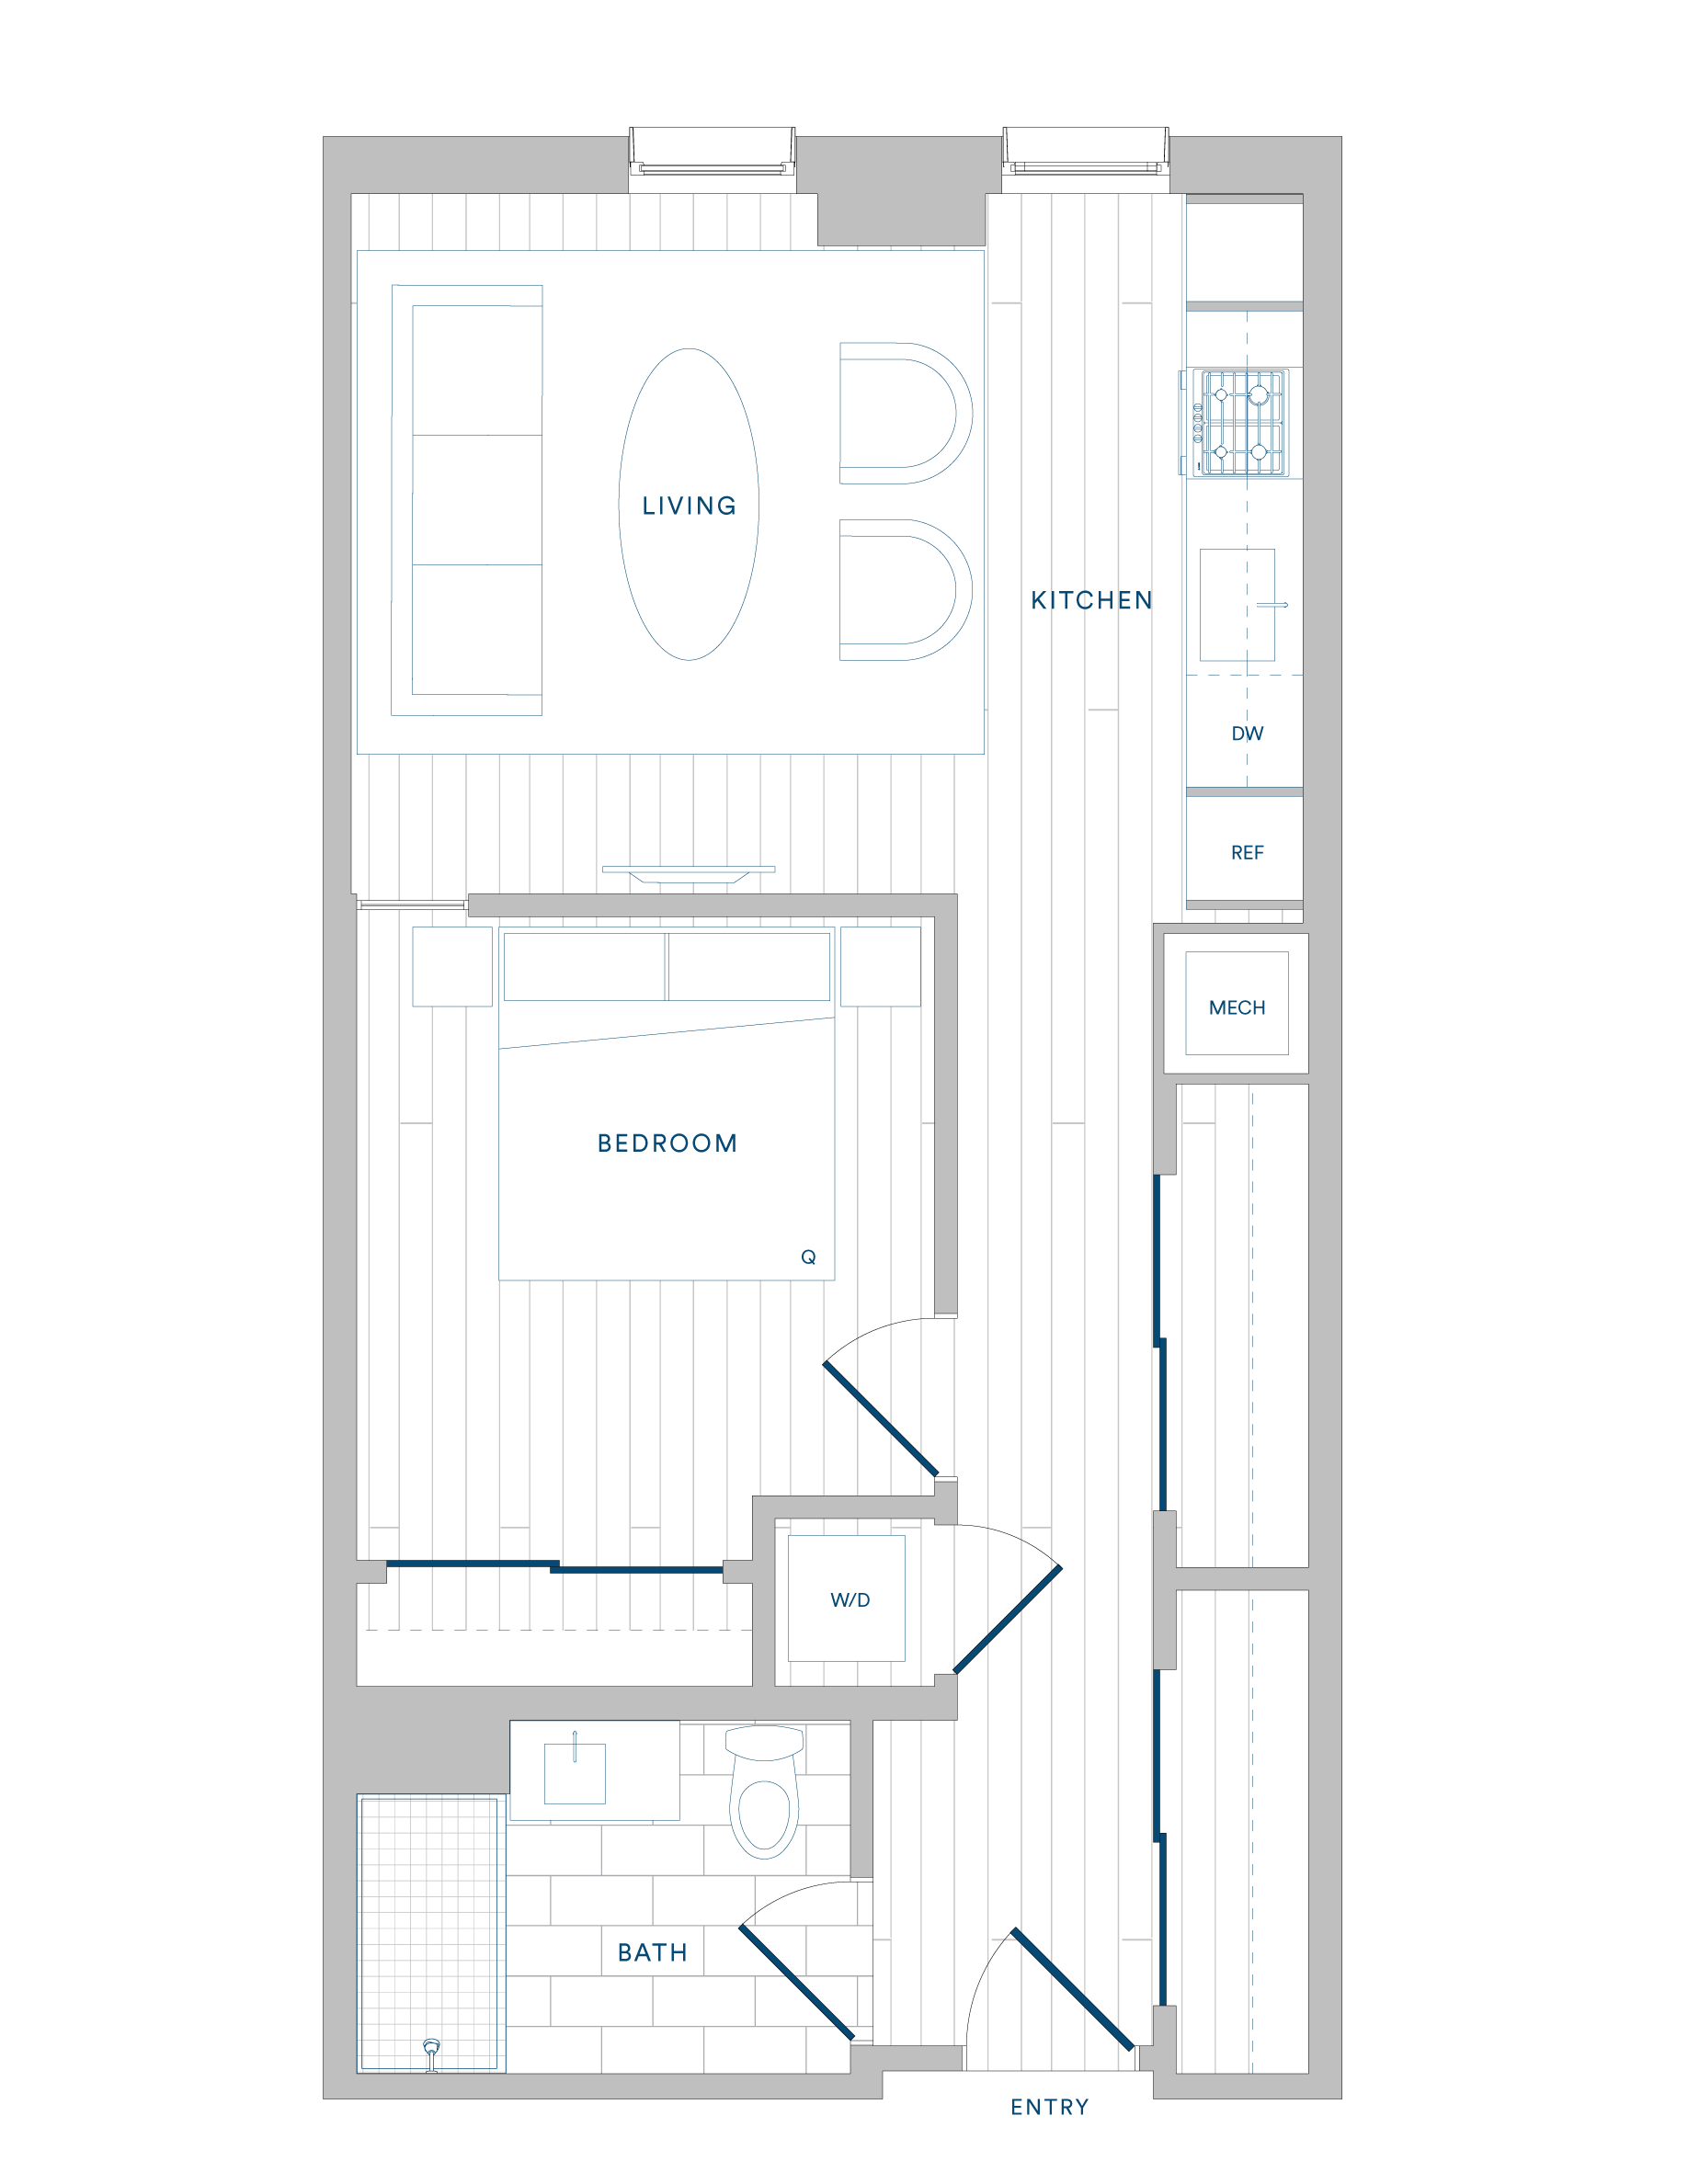 Floorplan for Apartment #211, 1 bedroom unit at Margarite